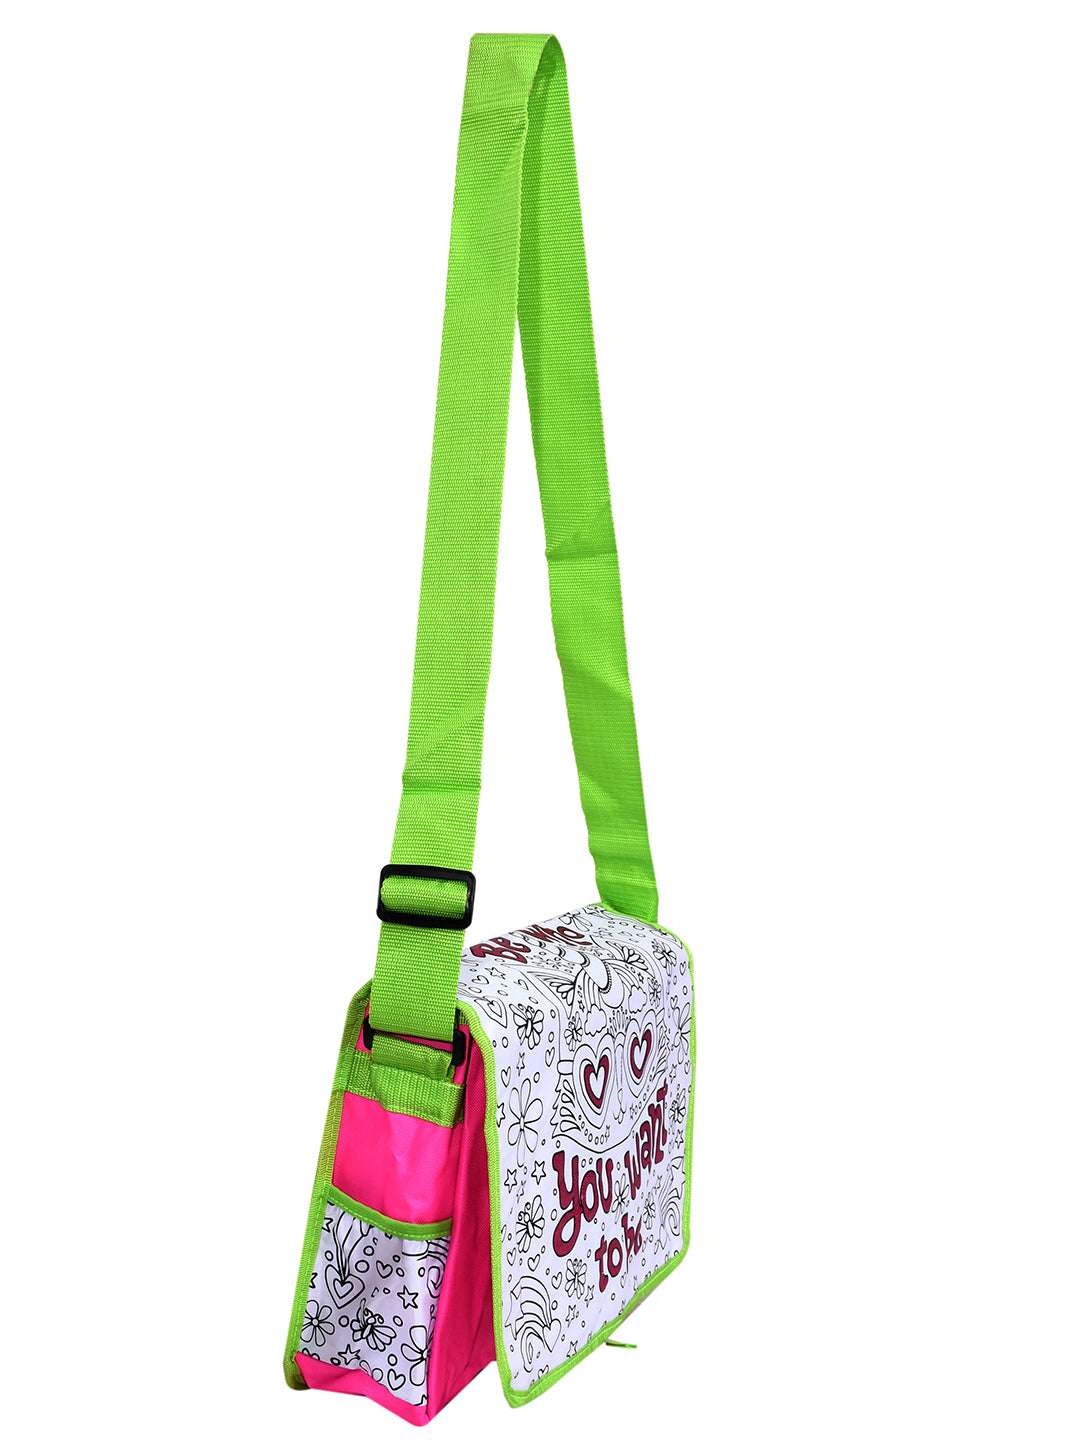 Mirada Color Your Own Caticorn Shoulder Bag